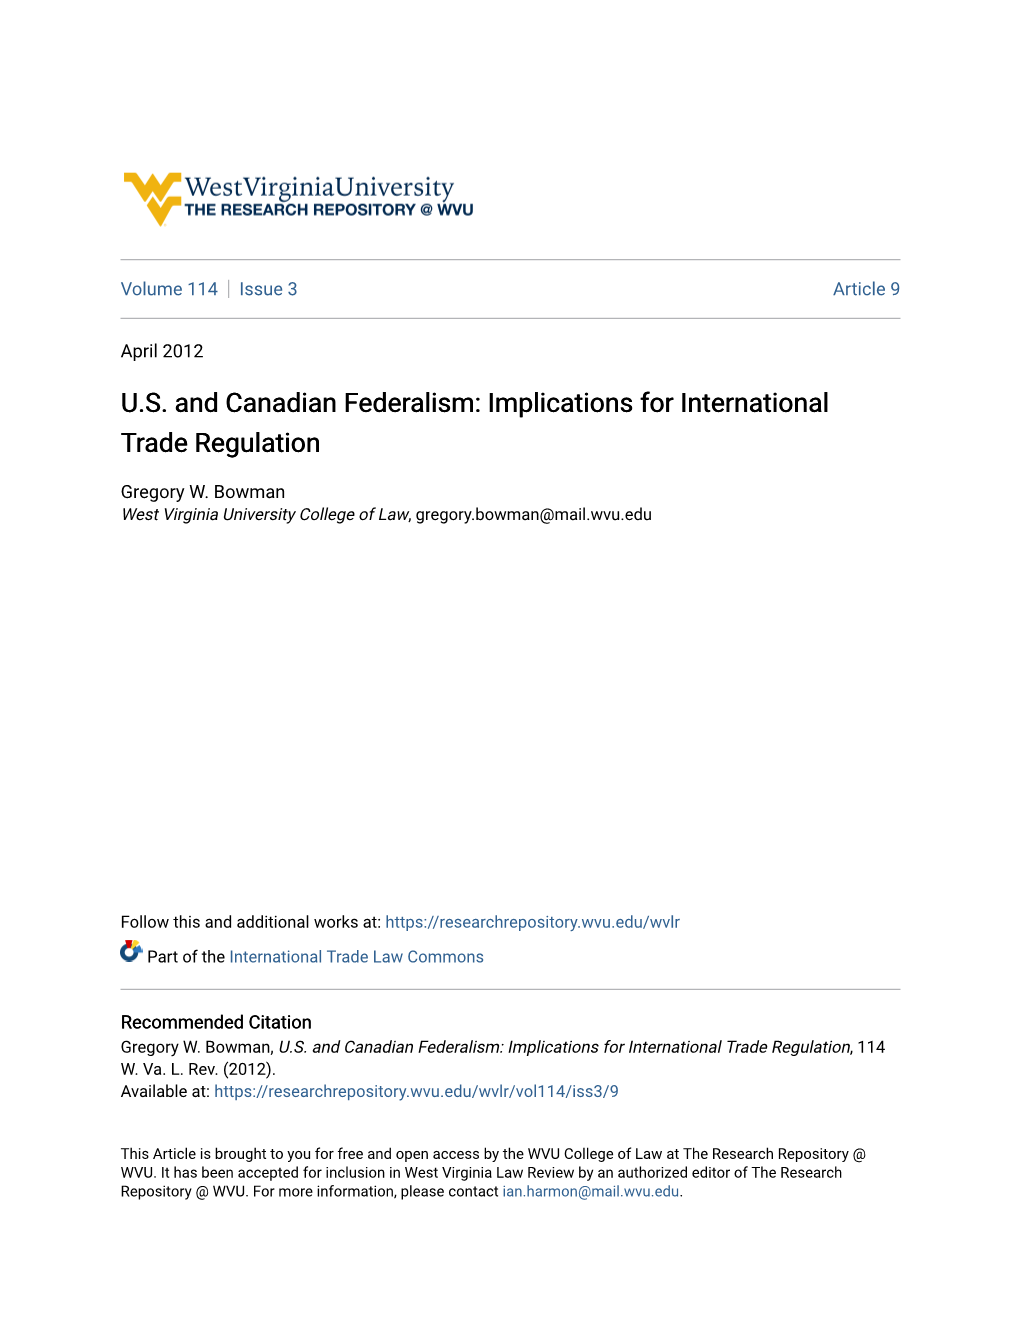 U.S. and Canadian Federalism: Implications for International Trade Regulation